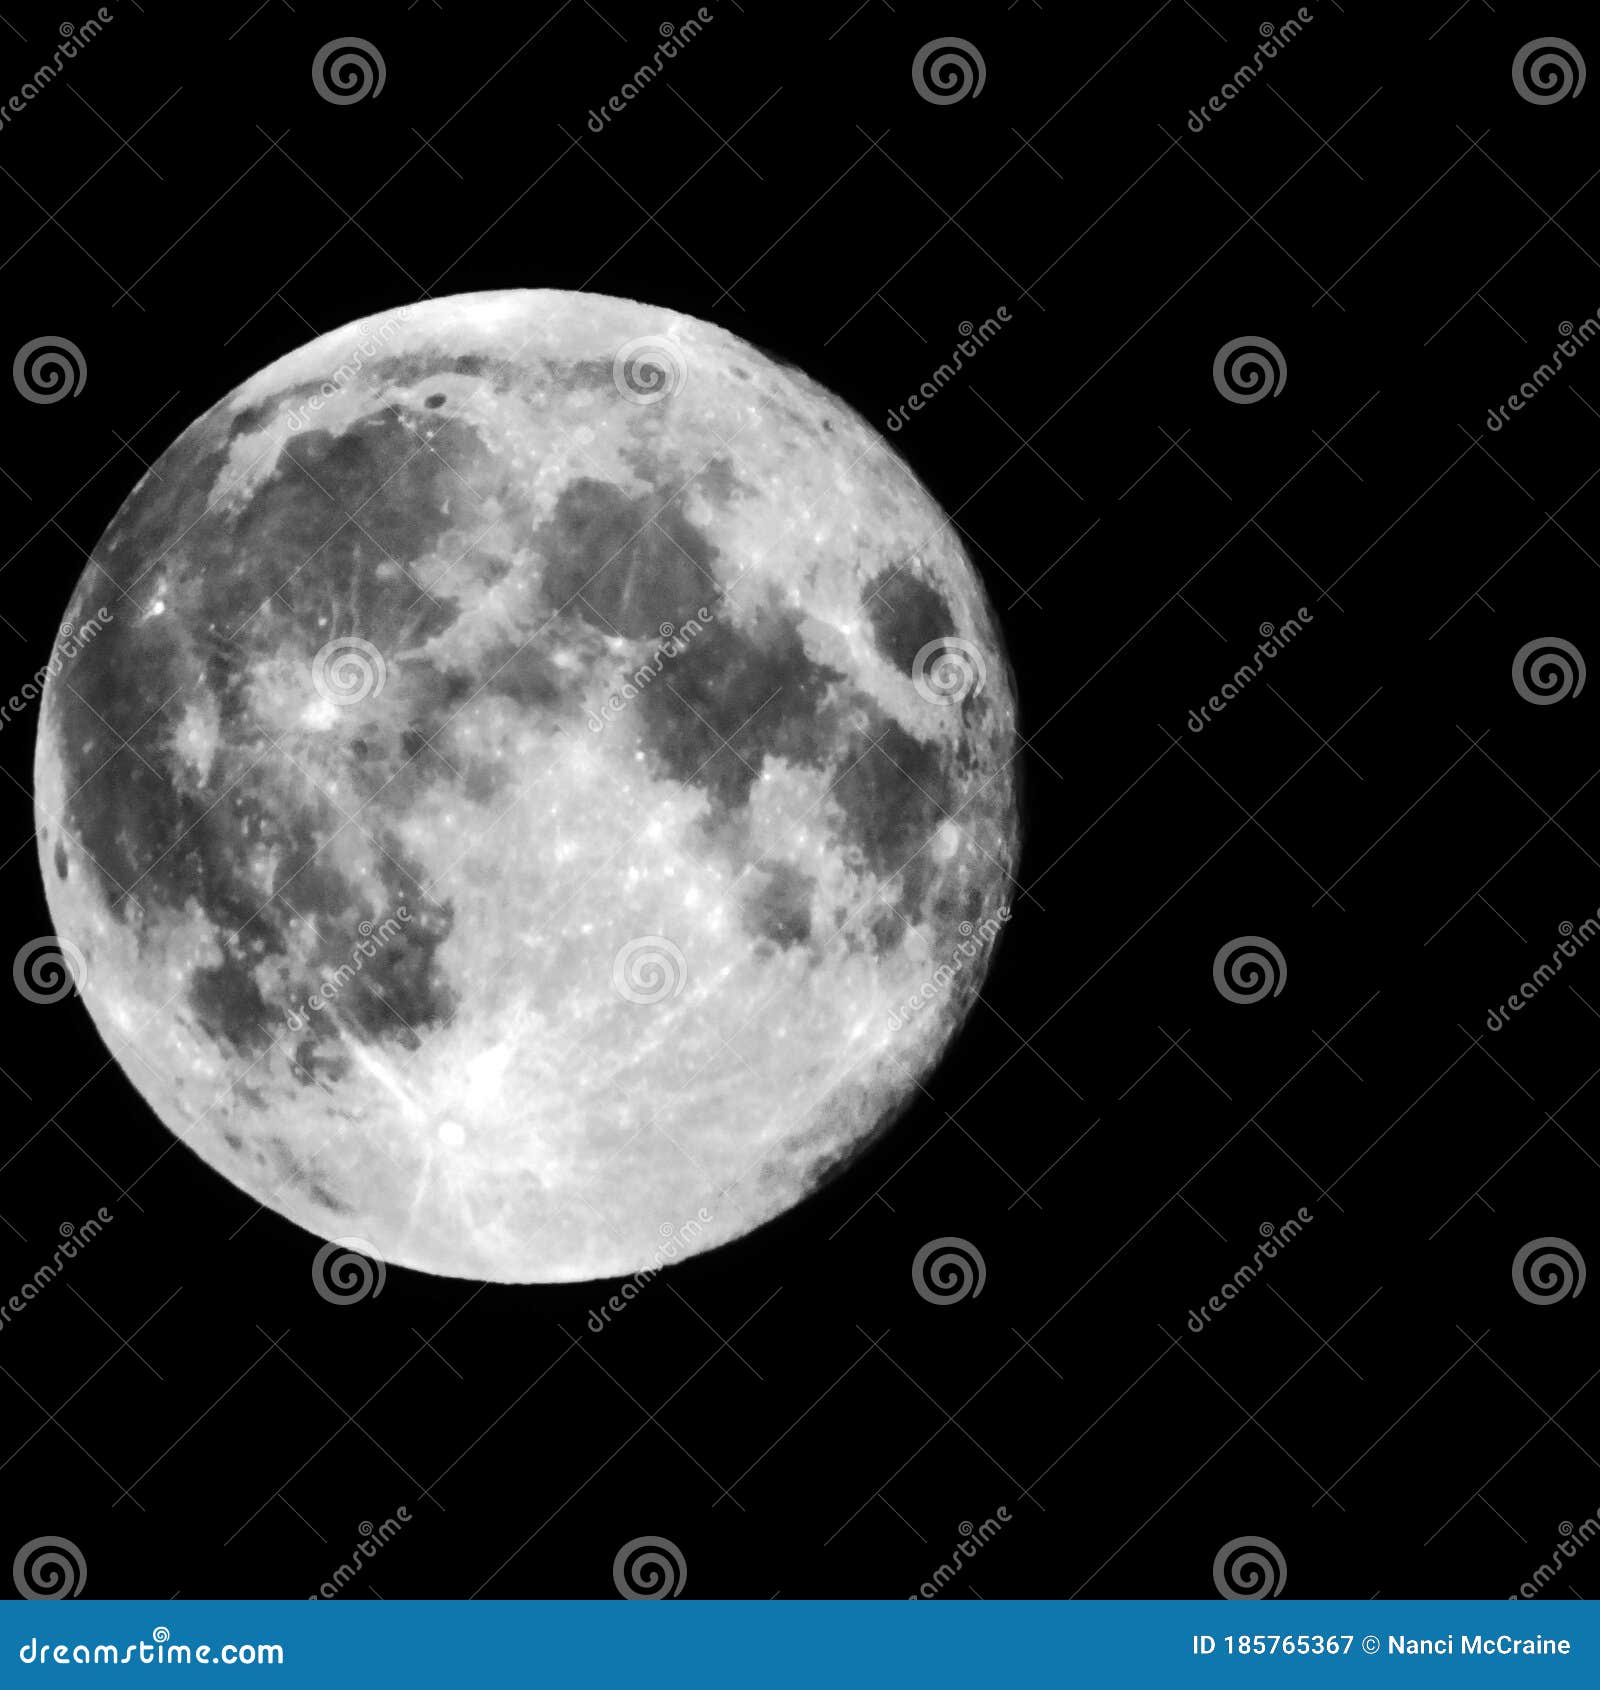 june full moon is strawberry moon